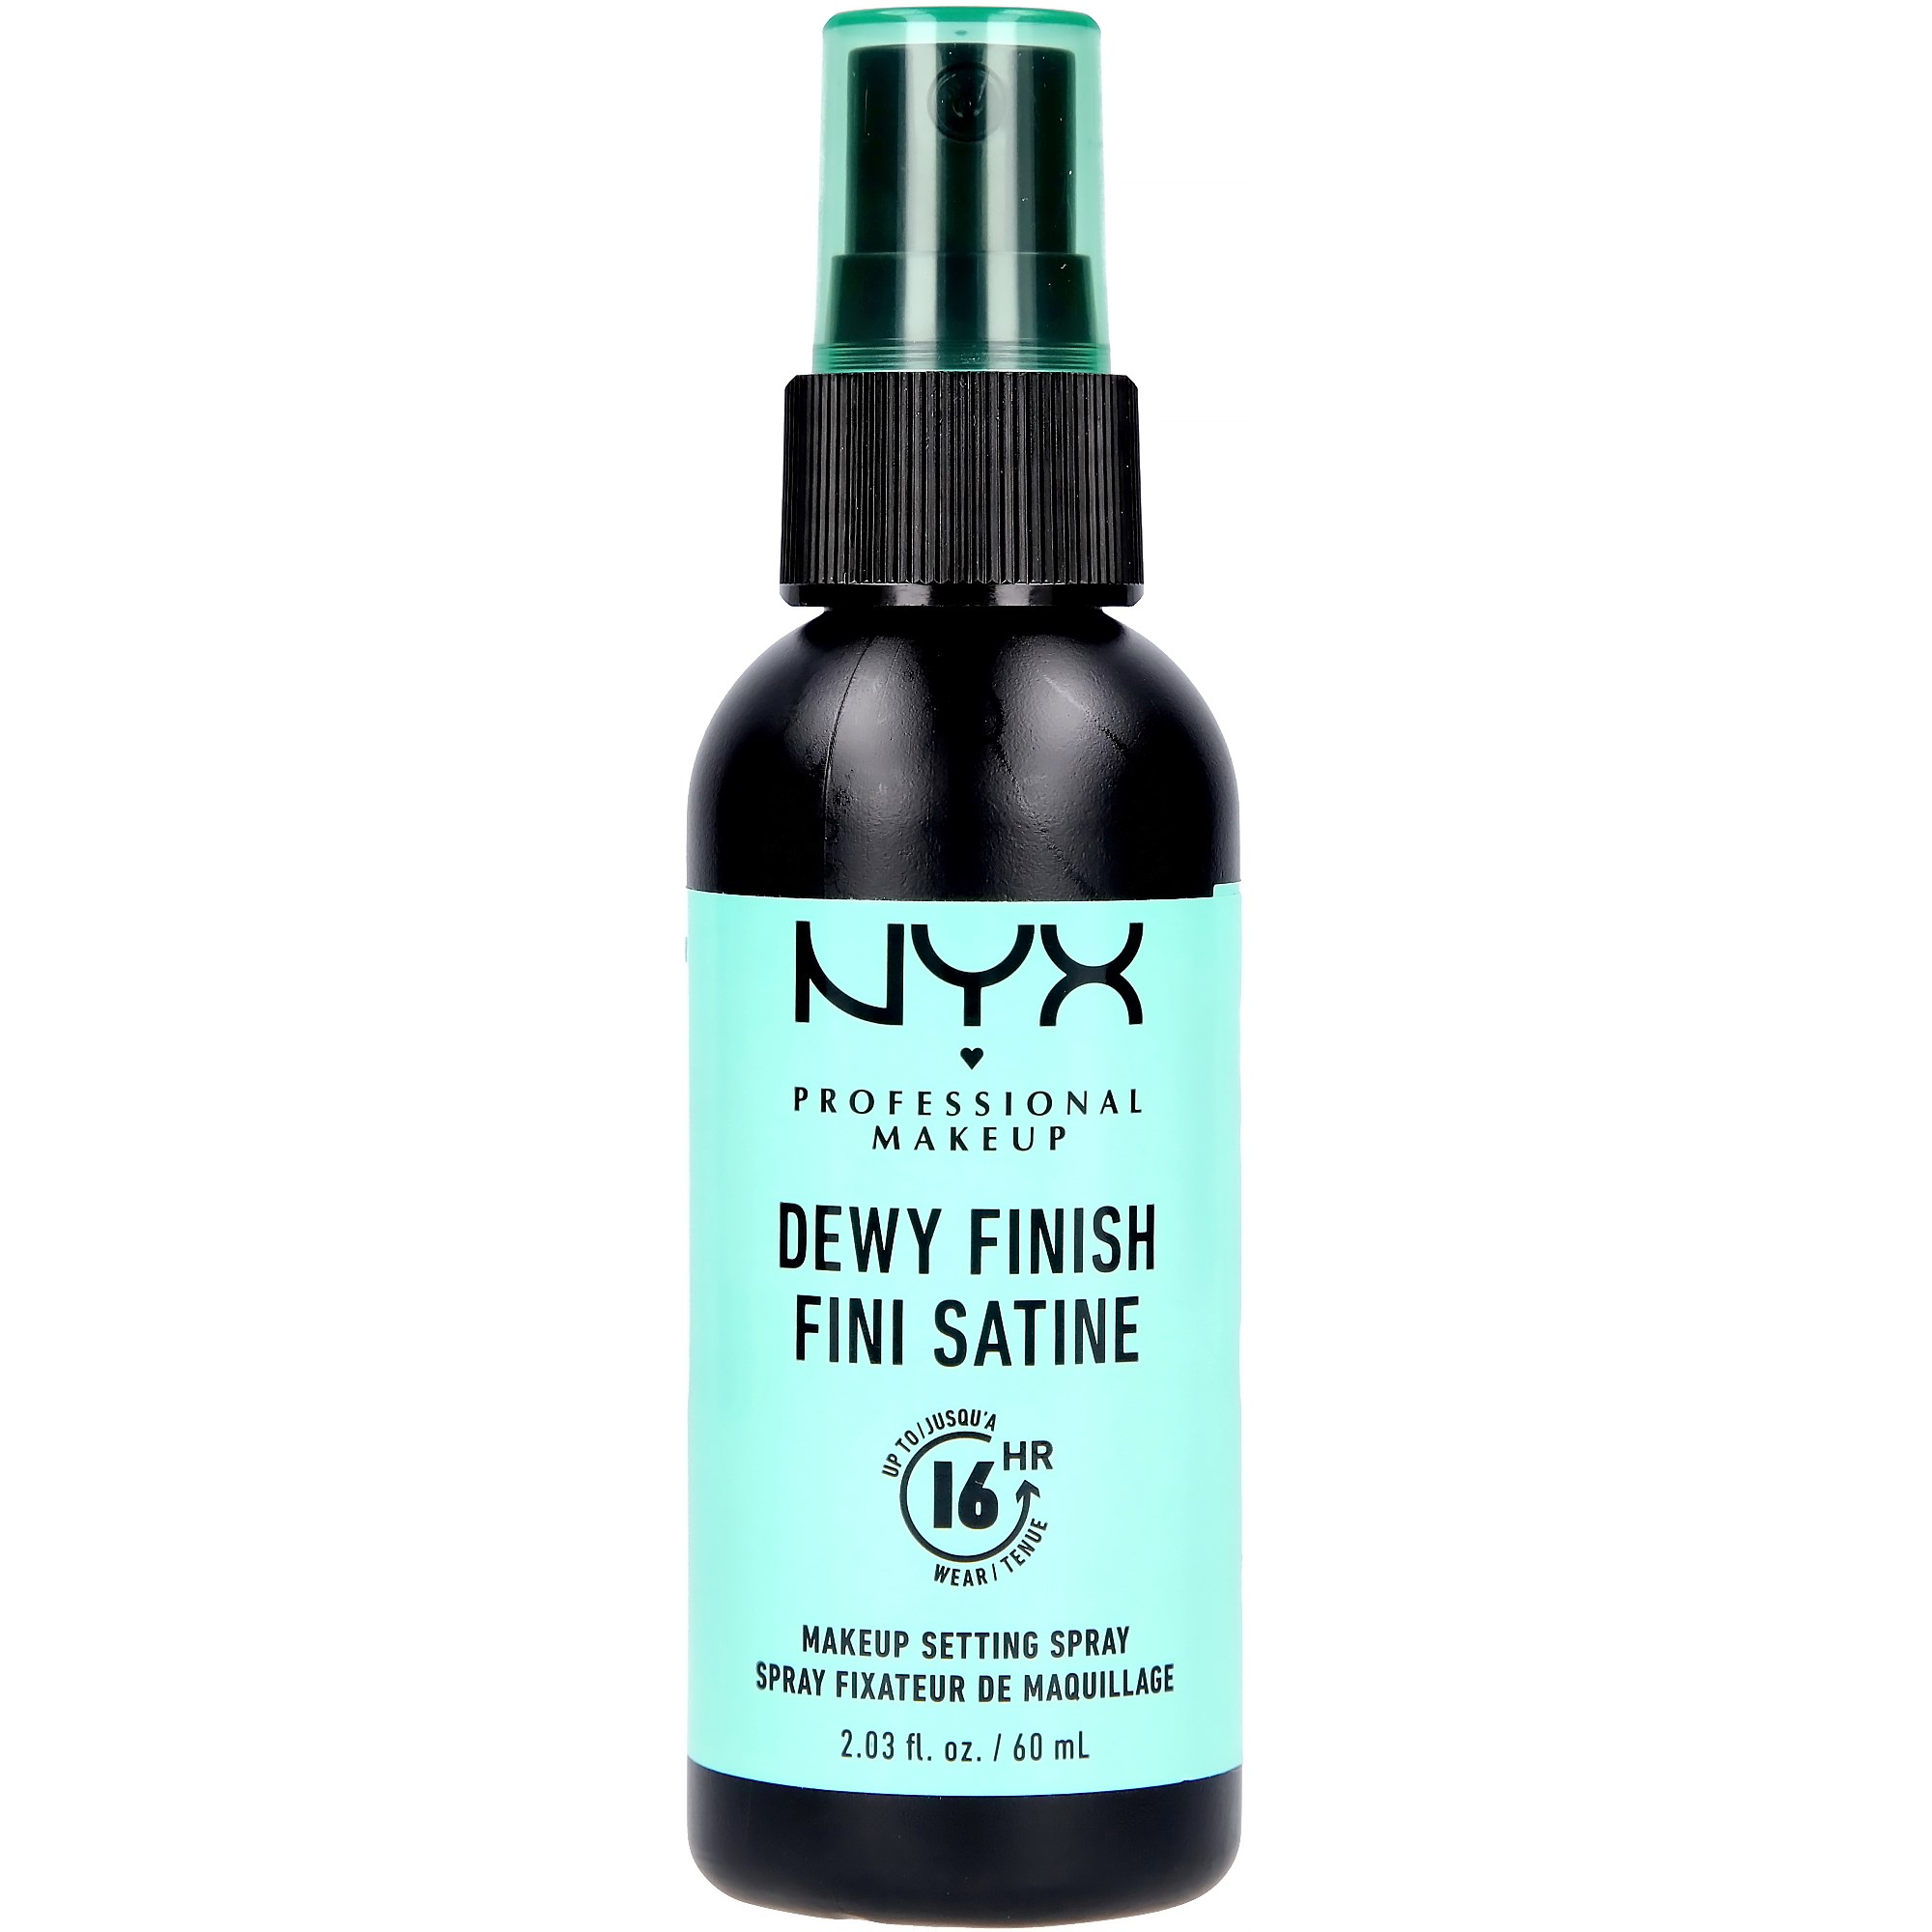 Zdjęcia - Puder i róż NYX PROFESSIONAL MAKEUP Makeup Setting Spray Dewy Finish 60 ml 